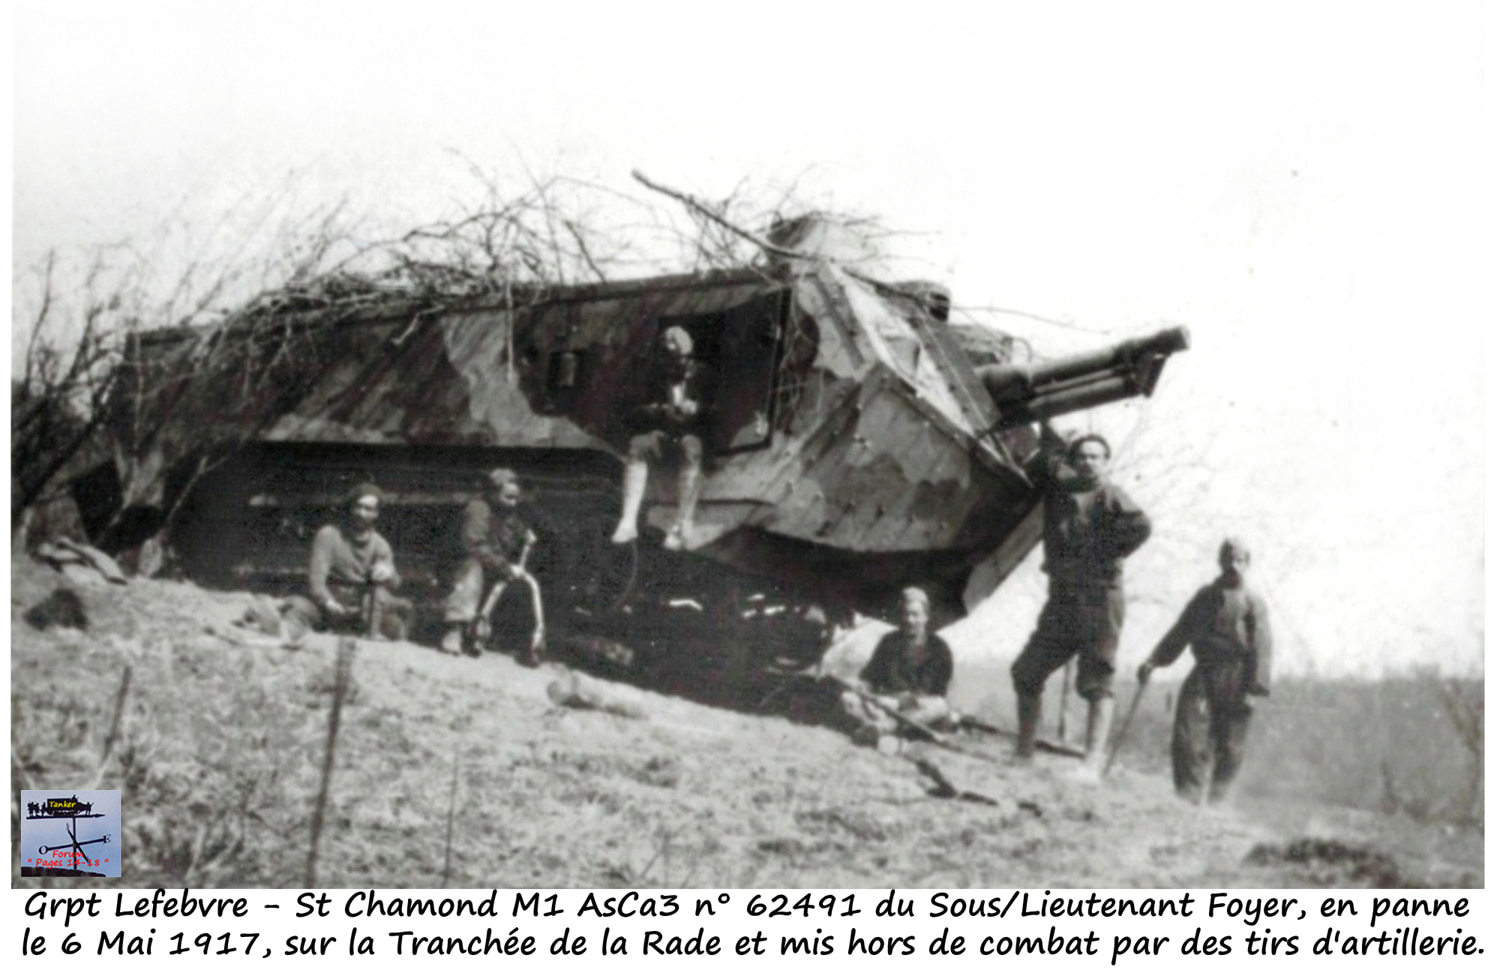 Grpt Lefebvre - AS 31 - St Chamond AsCo3 n° 61491 (01a)-min.jpg